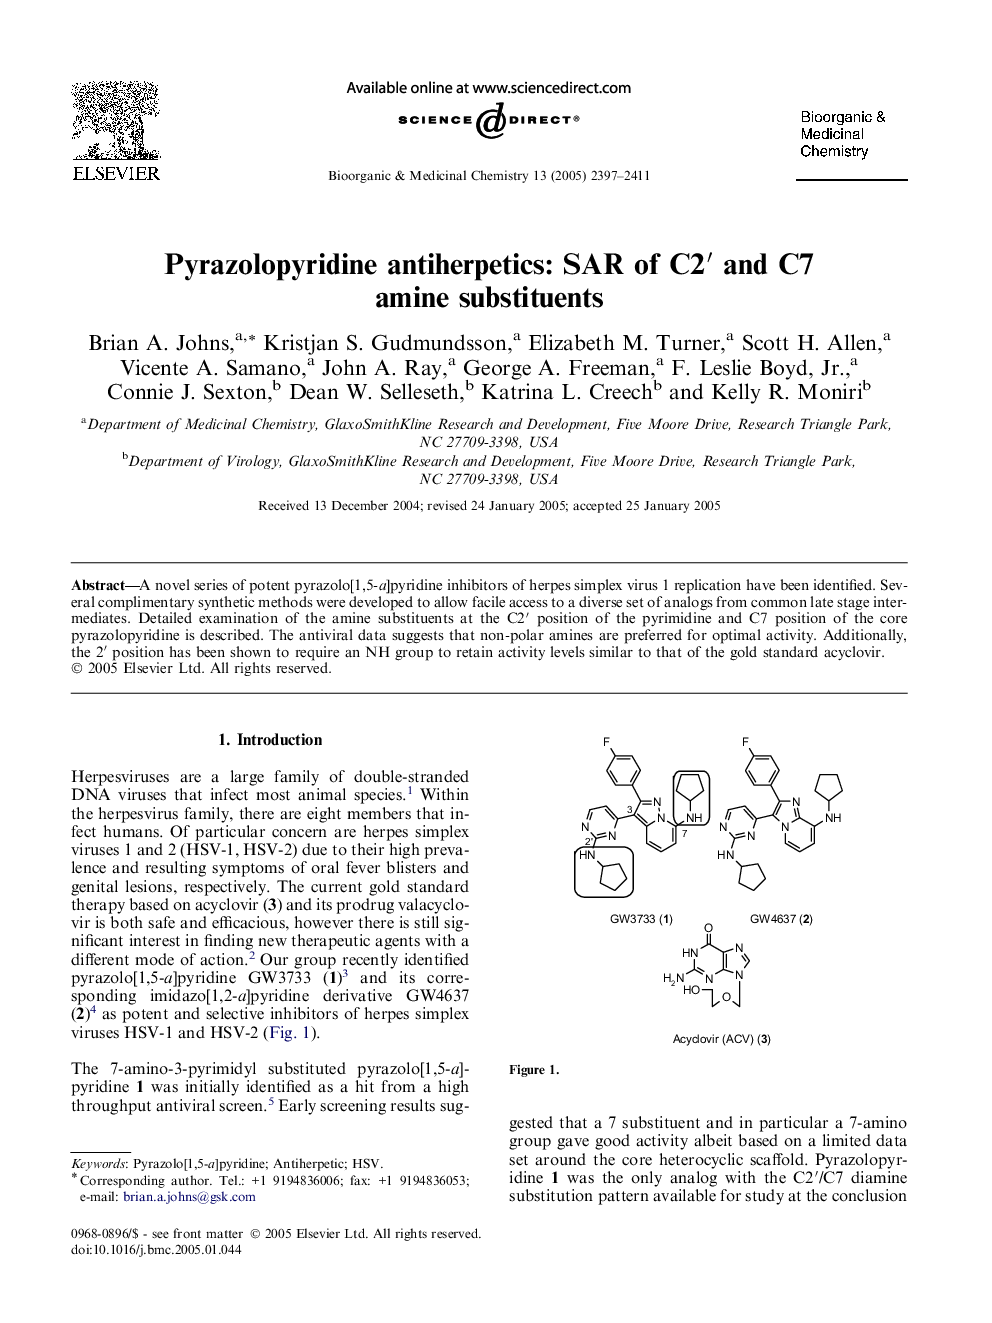 Pyrazolopyridine antiherpetics: SAR of C2′ and C7 amine substituents